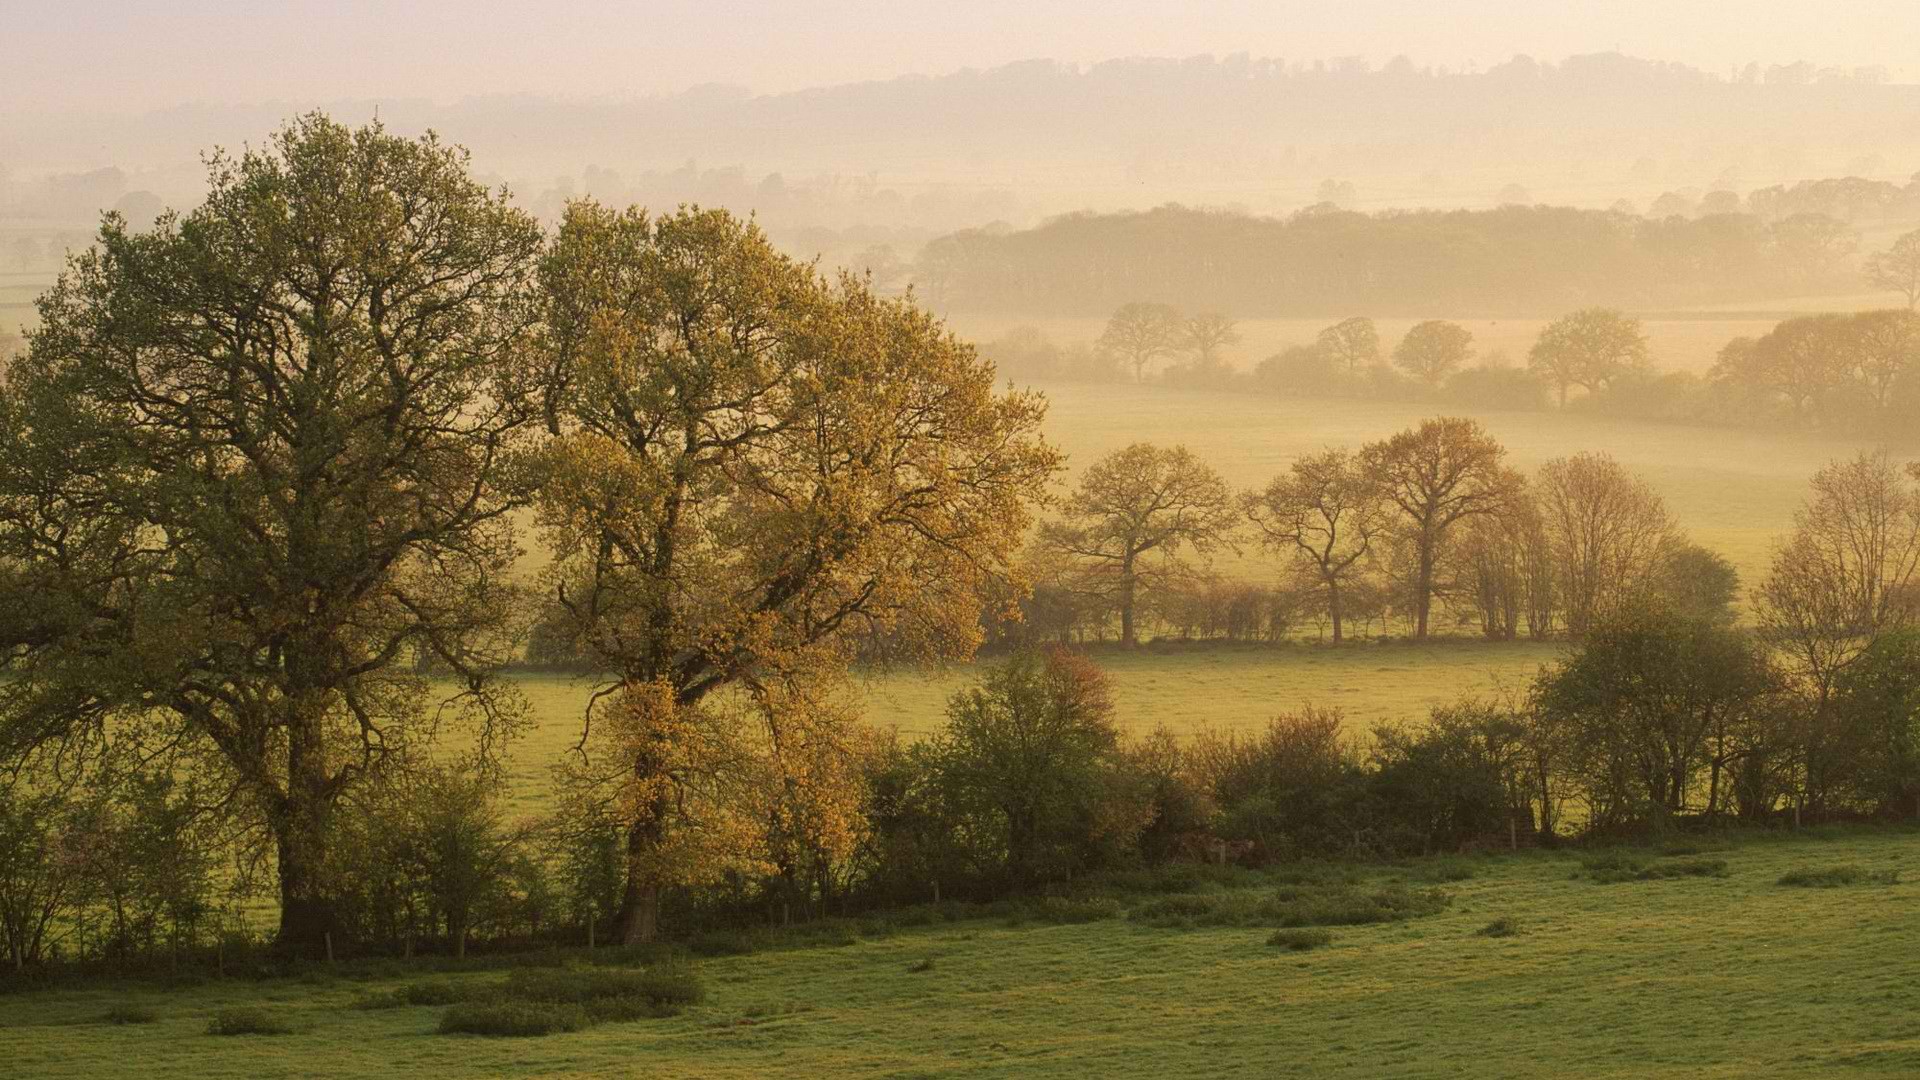 dawn, England - desktop wallpaper